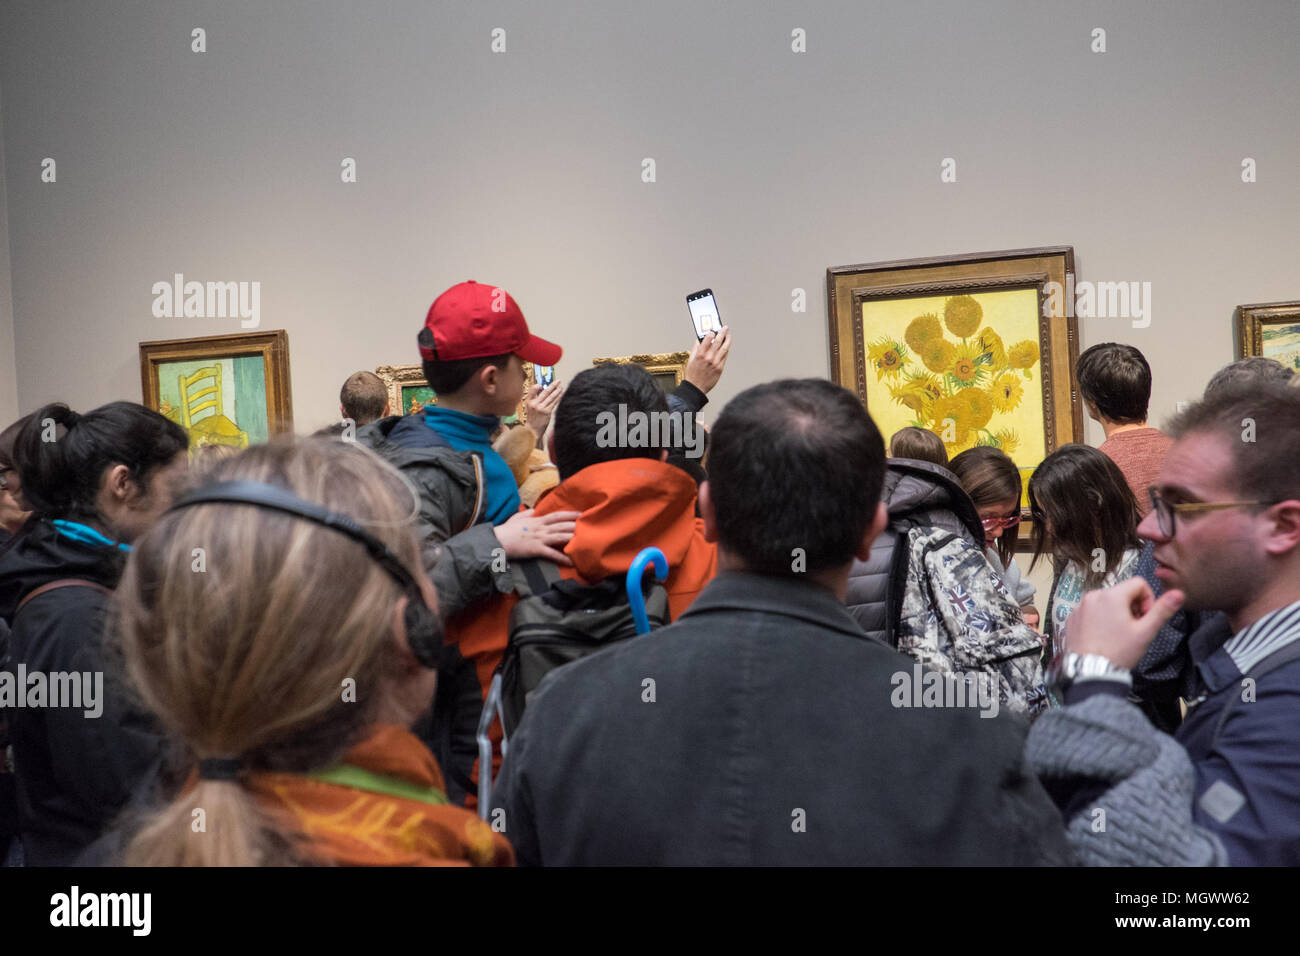 Photographing,mobile,camera,phones,Vincent,Van Gogh,Sunflowers,painting,National Gallery,Trafalgar Square,London,England,Great Britain,GB,U.K.,UK, Stock Photo